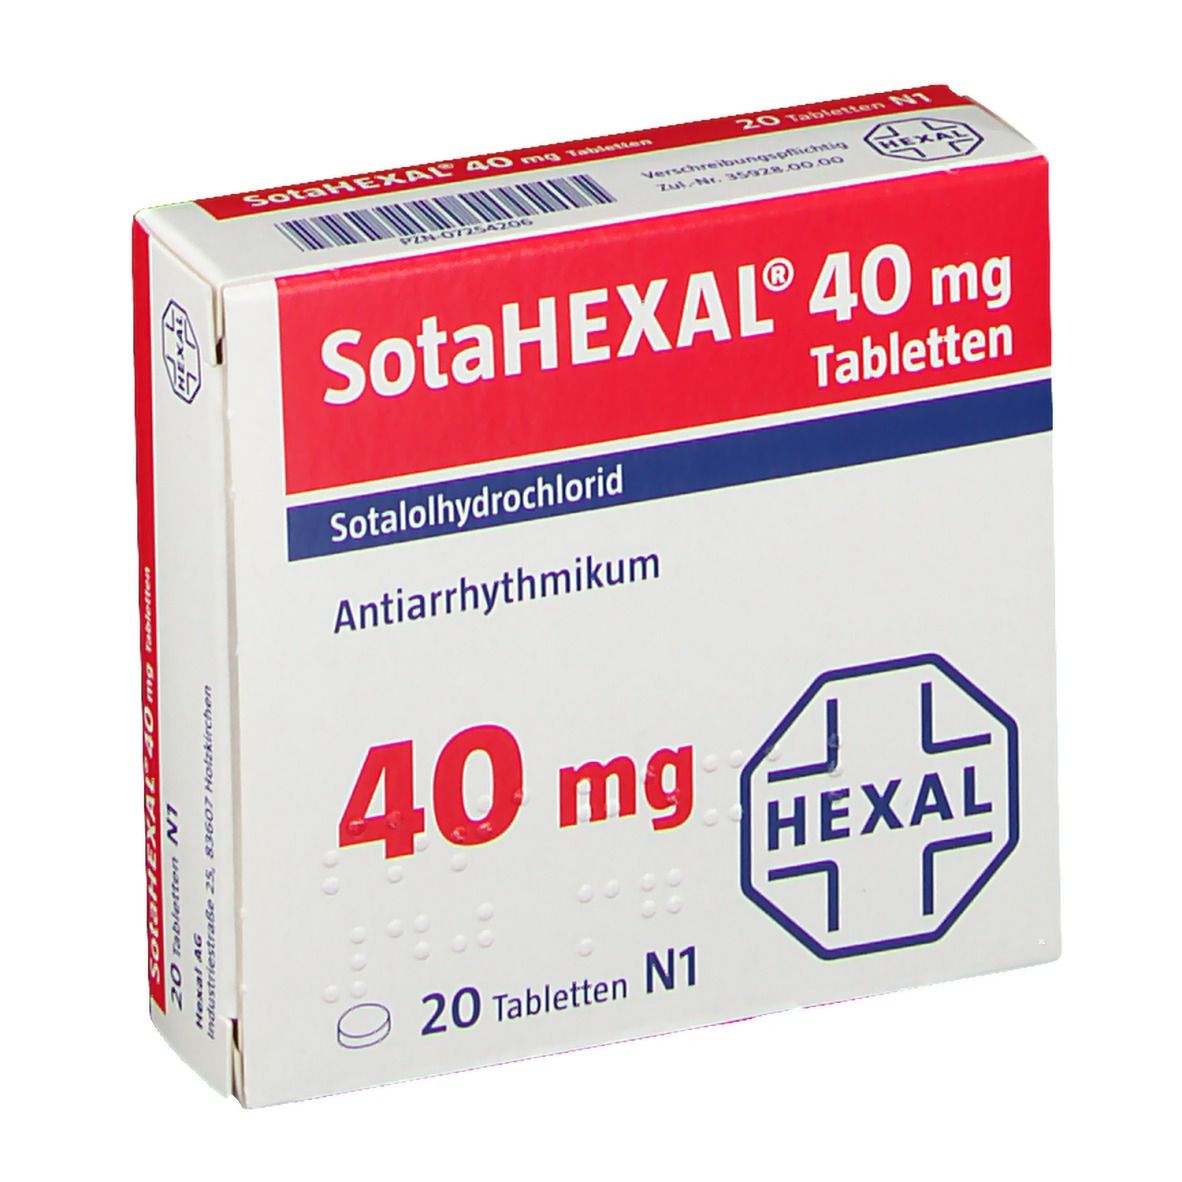 SotaHEXAL® 40 mg